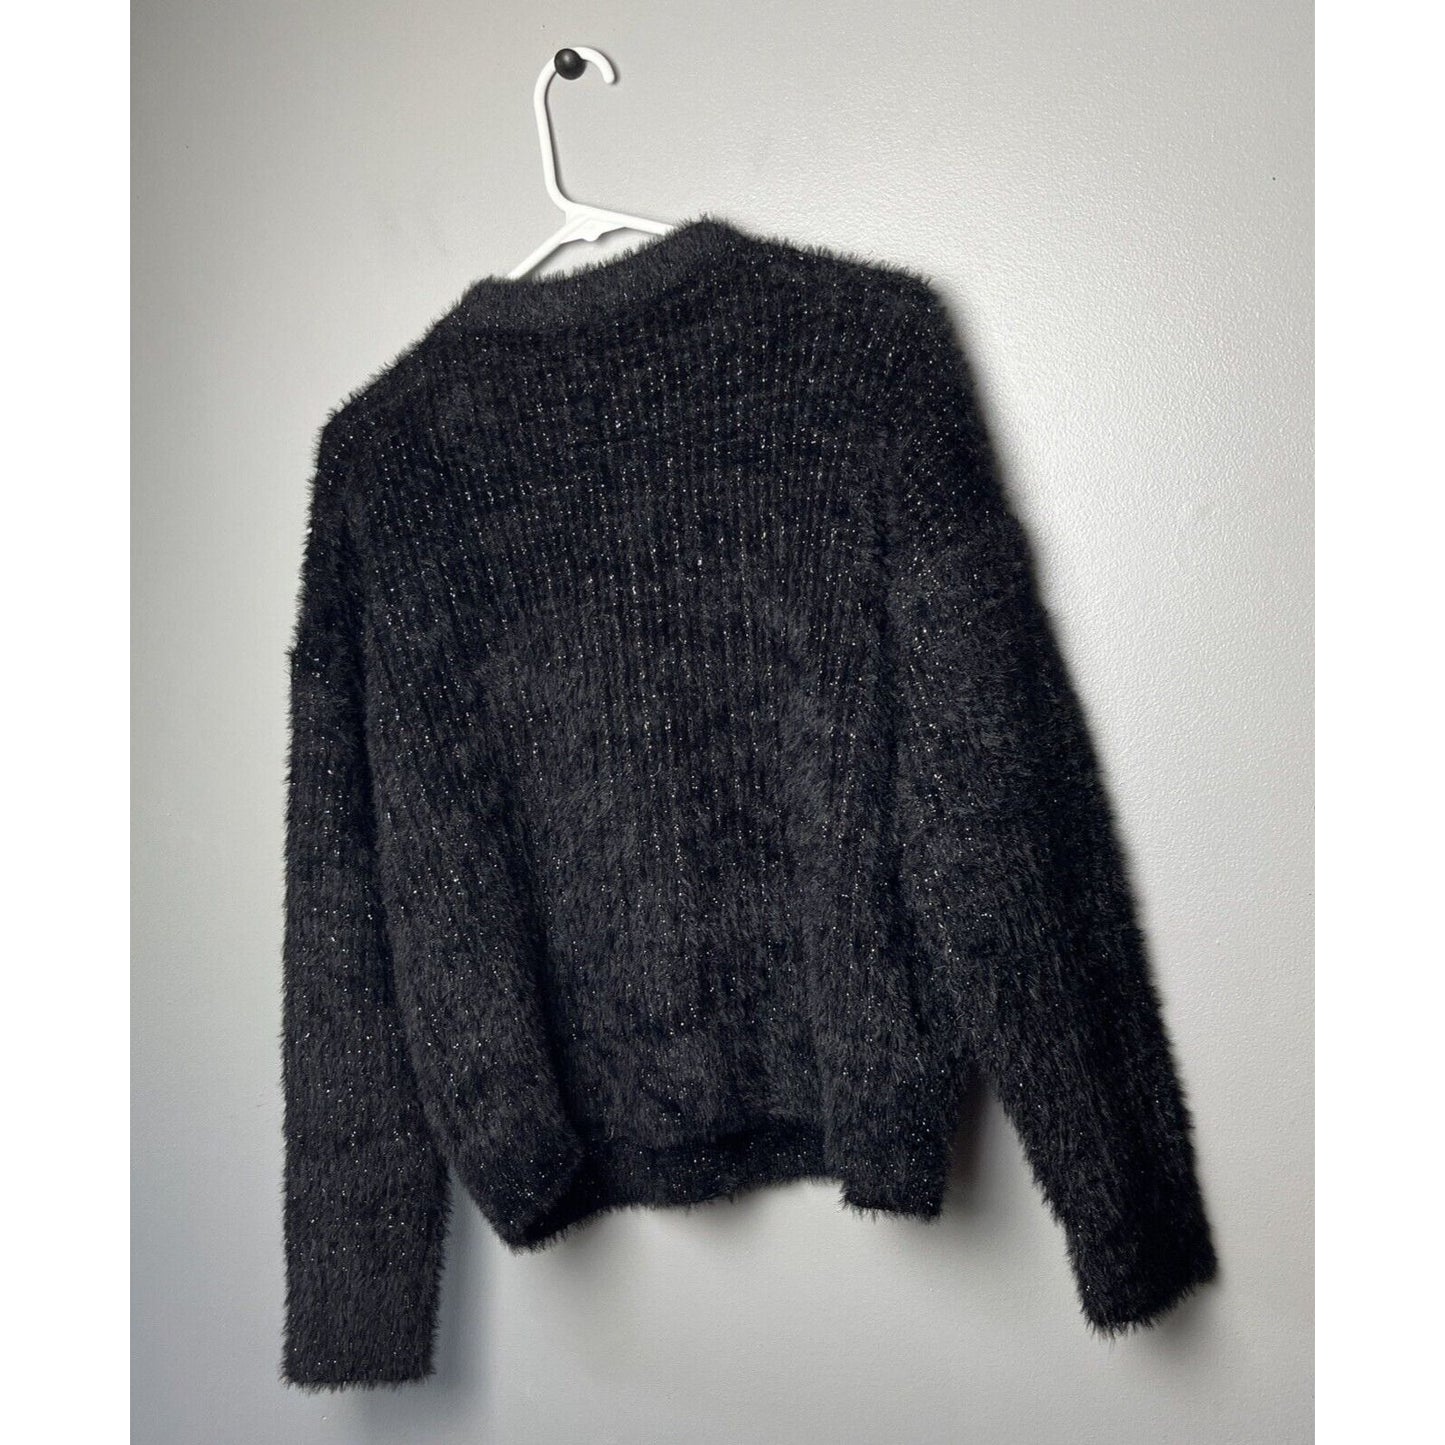 FRNCH Paris Black Eyelash Knit Metallic Sweater size S/M